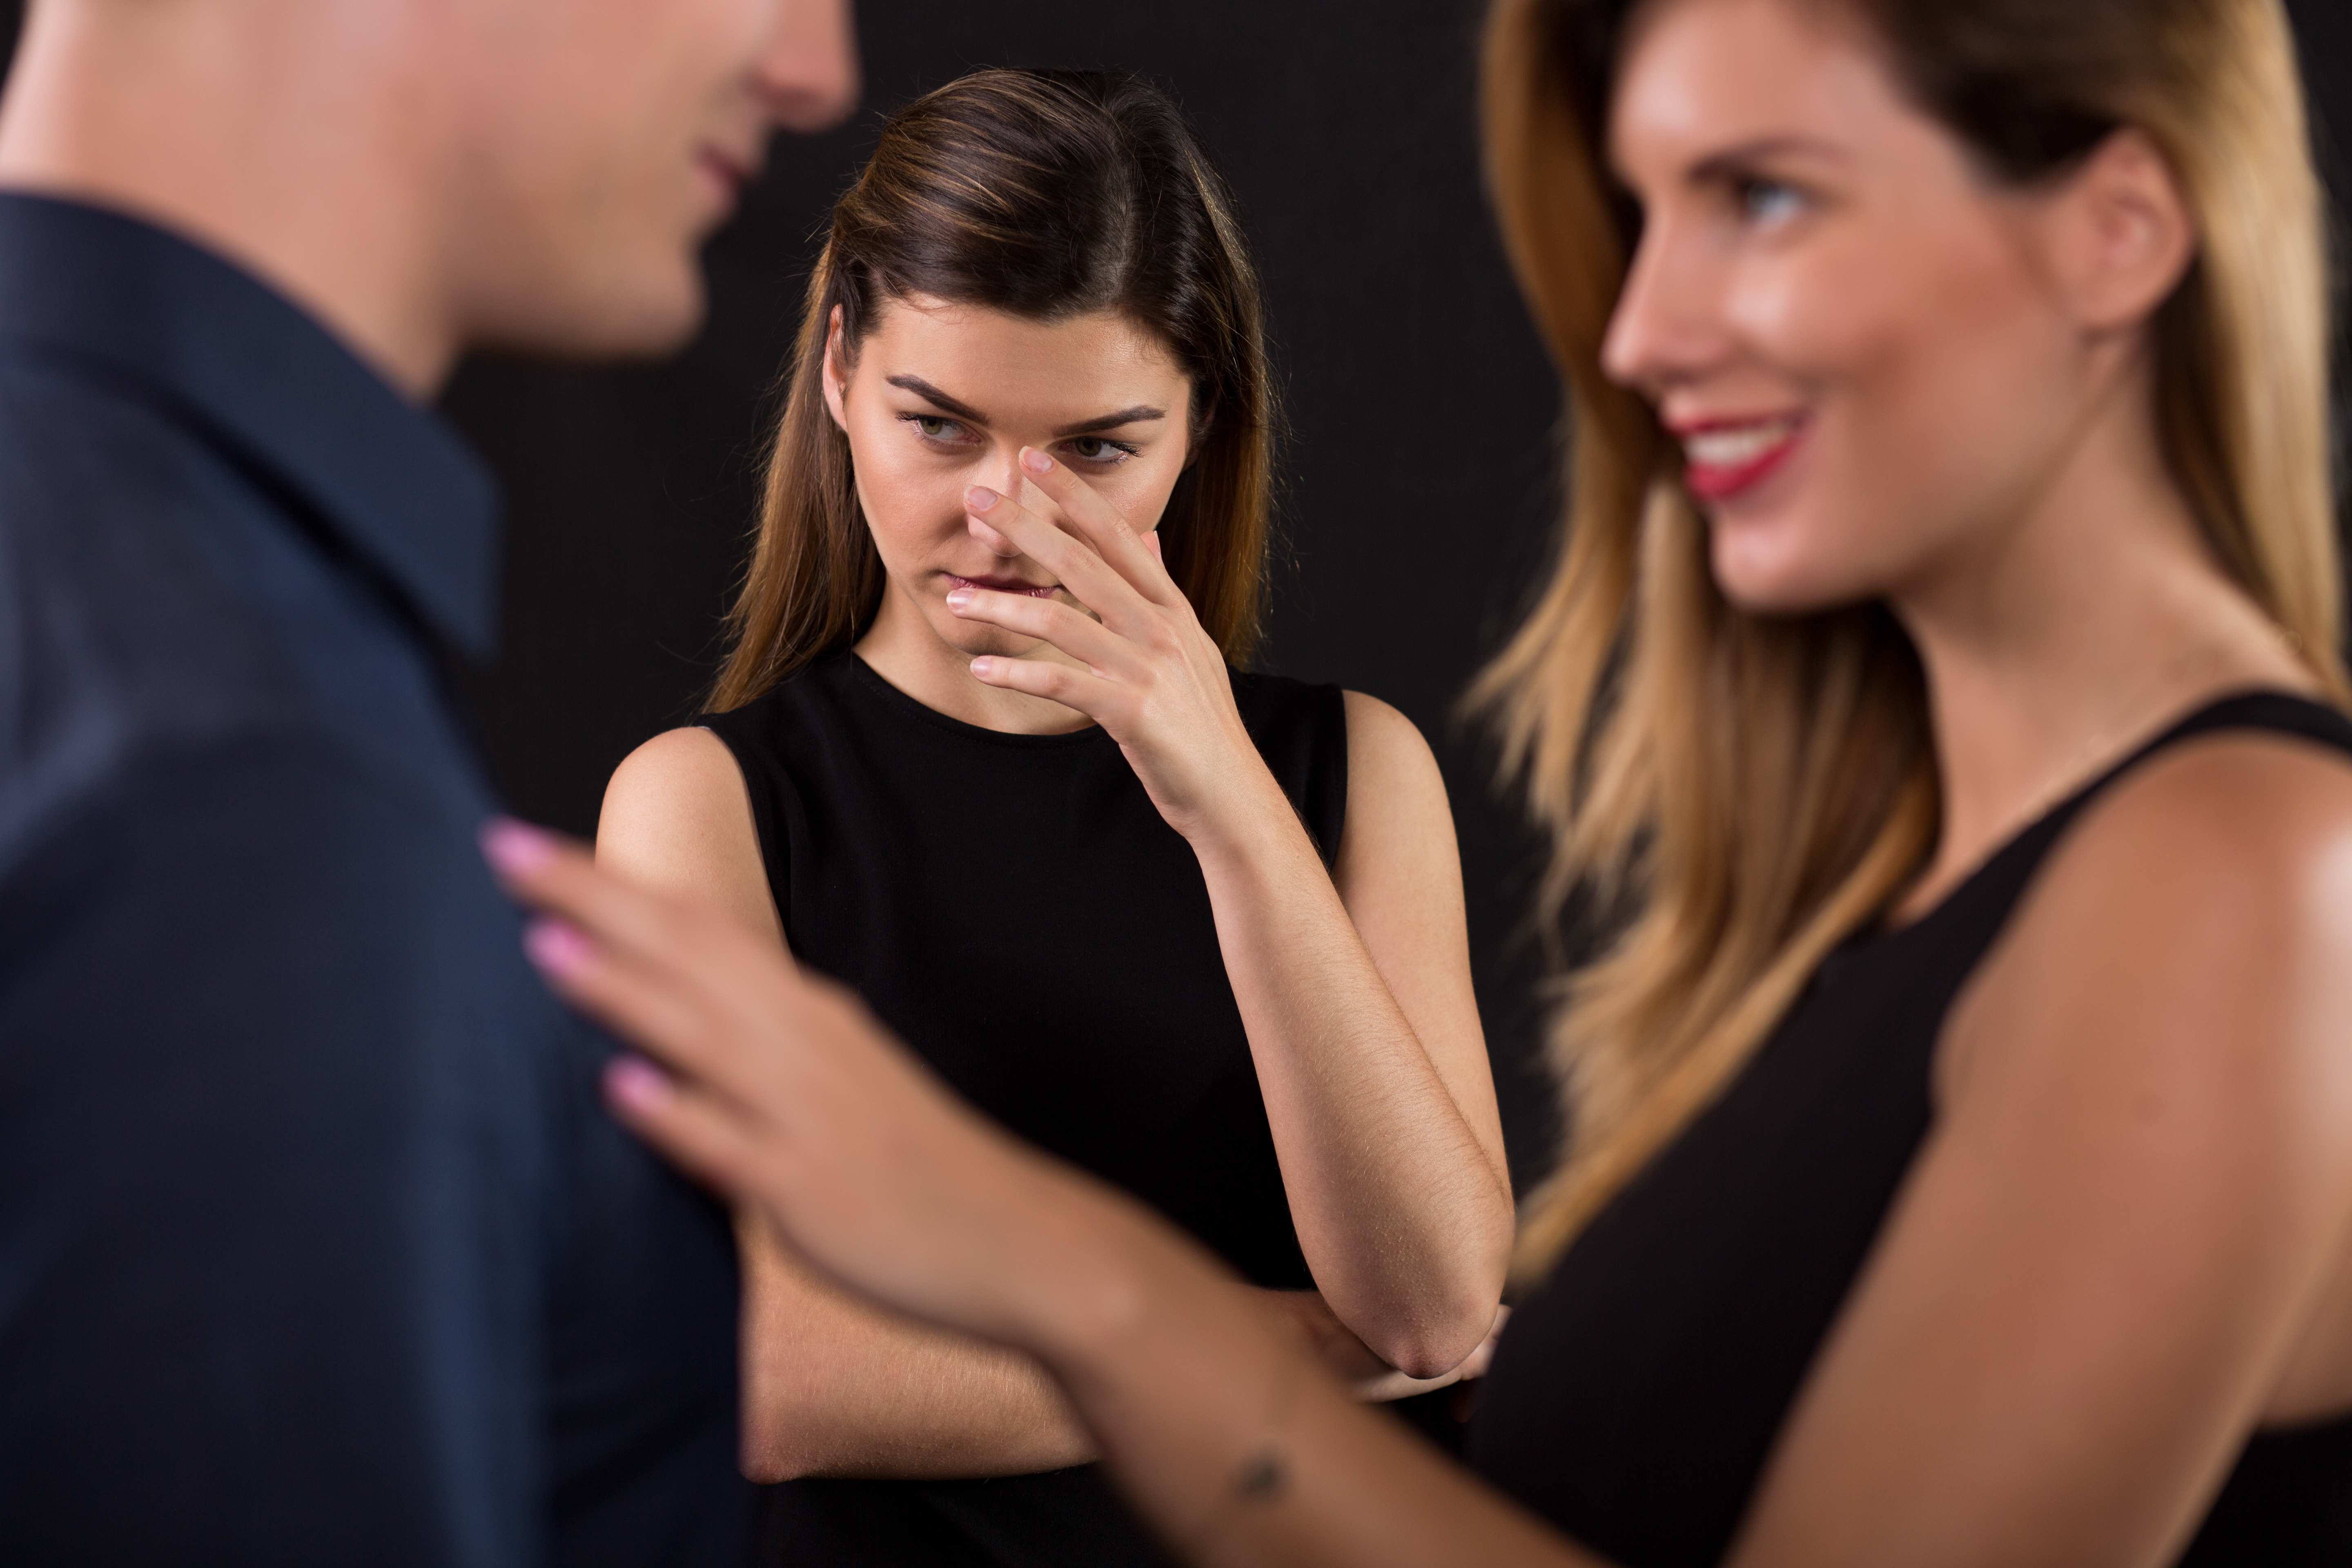 Mujer molesta cerca de una pareja | Foto: Shutterstock